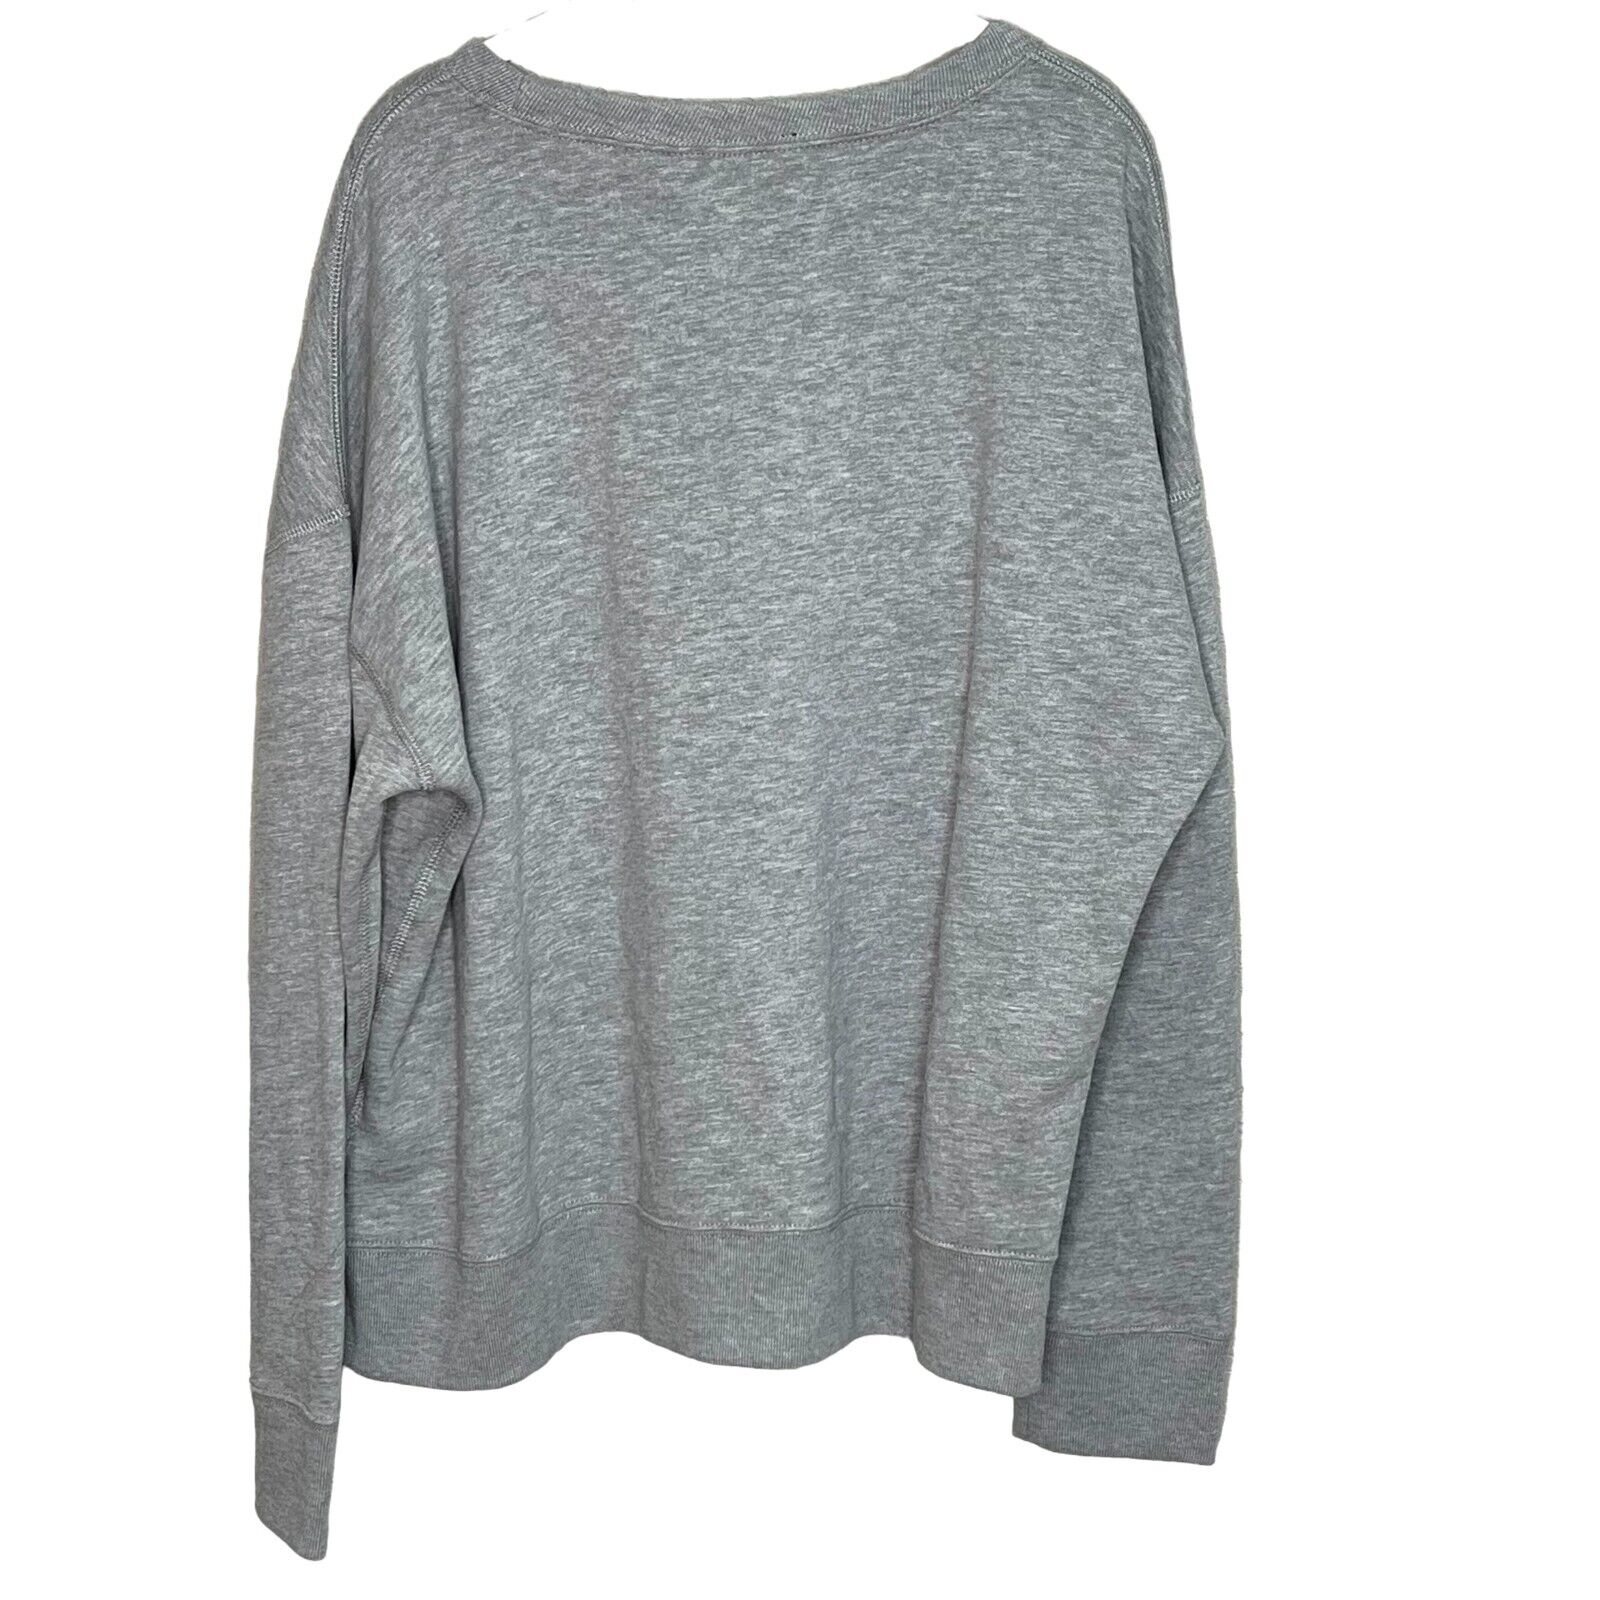 Polo Ralph Lauren Womens Grey USA Flag Sweatshirt Size Large NEW